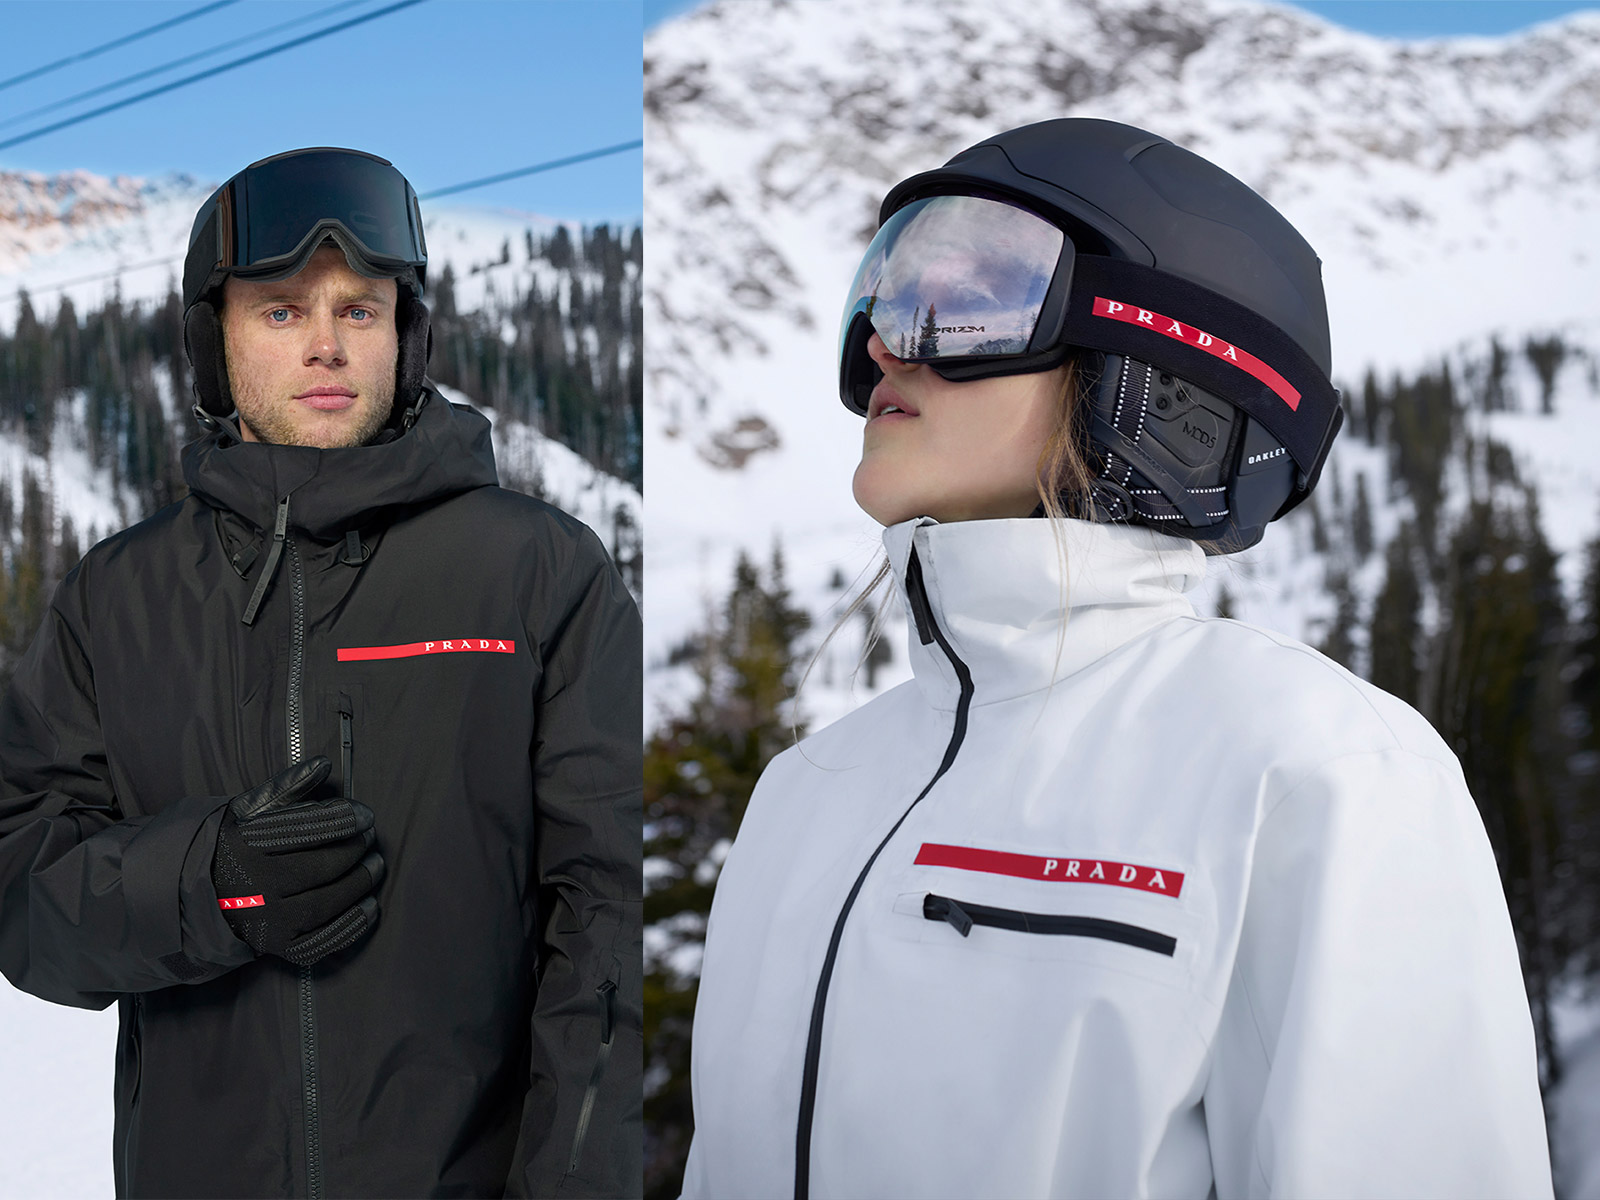 PRADA on X: #PradaLineaRossa's FW22 Ski collection combines the